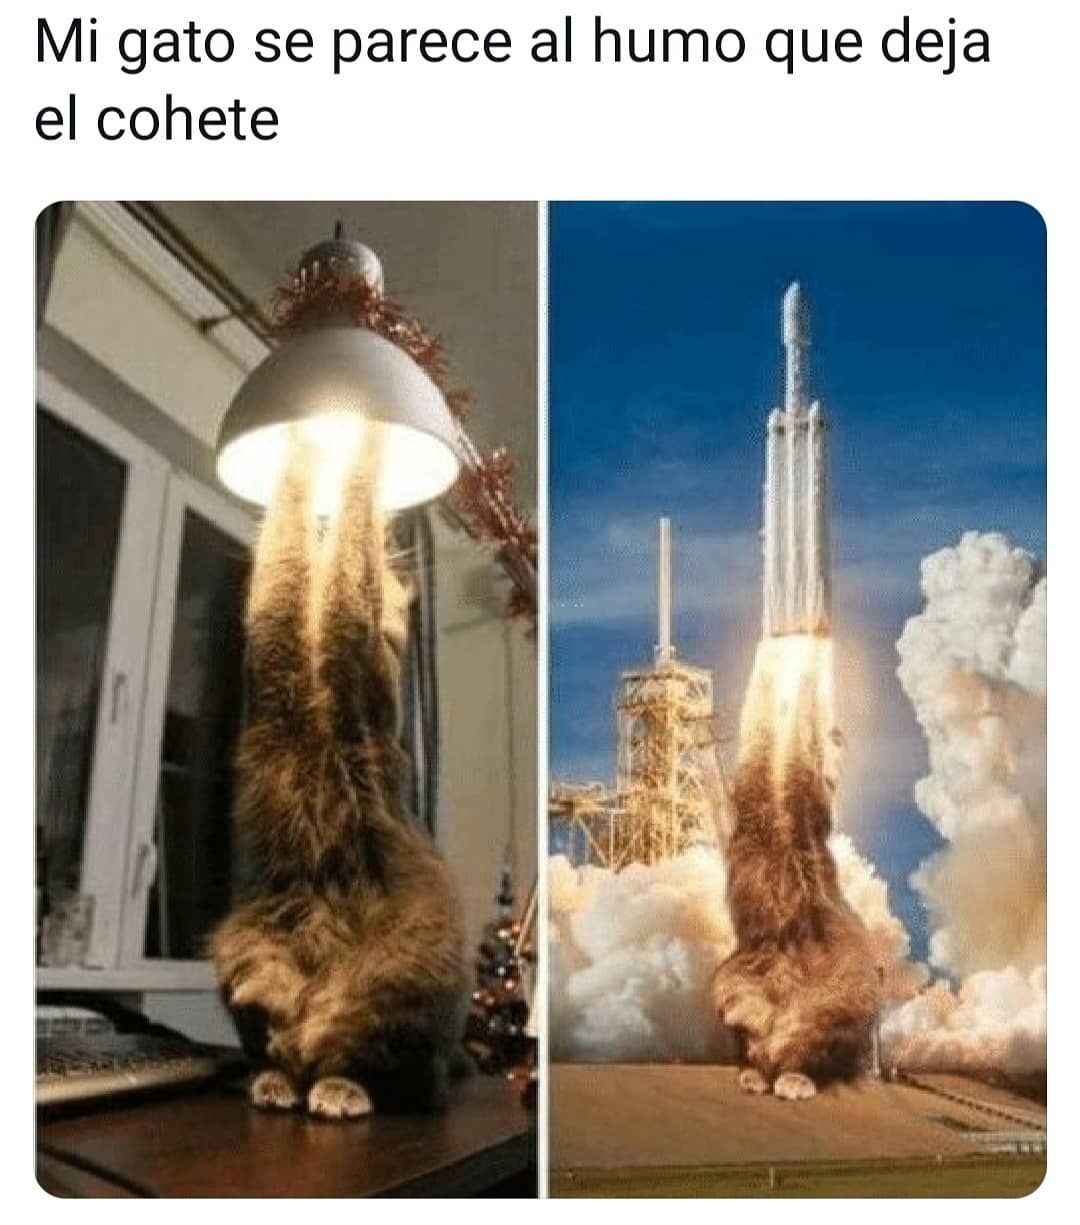 Mi gato se parece al humo que deja el cohete.